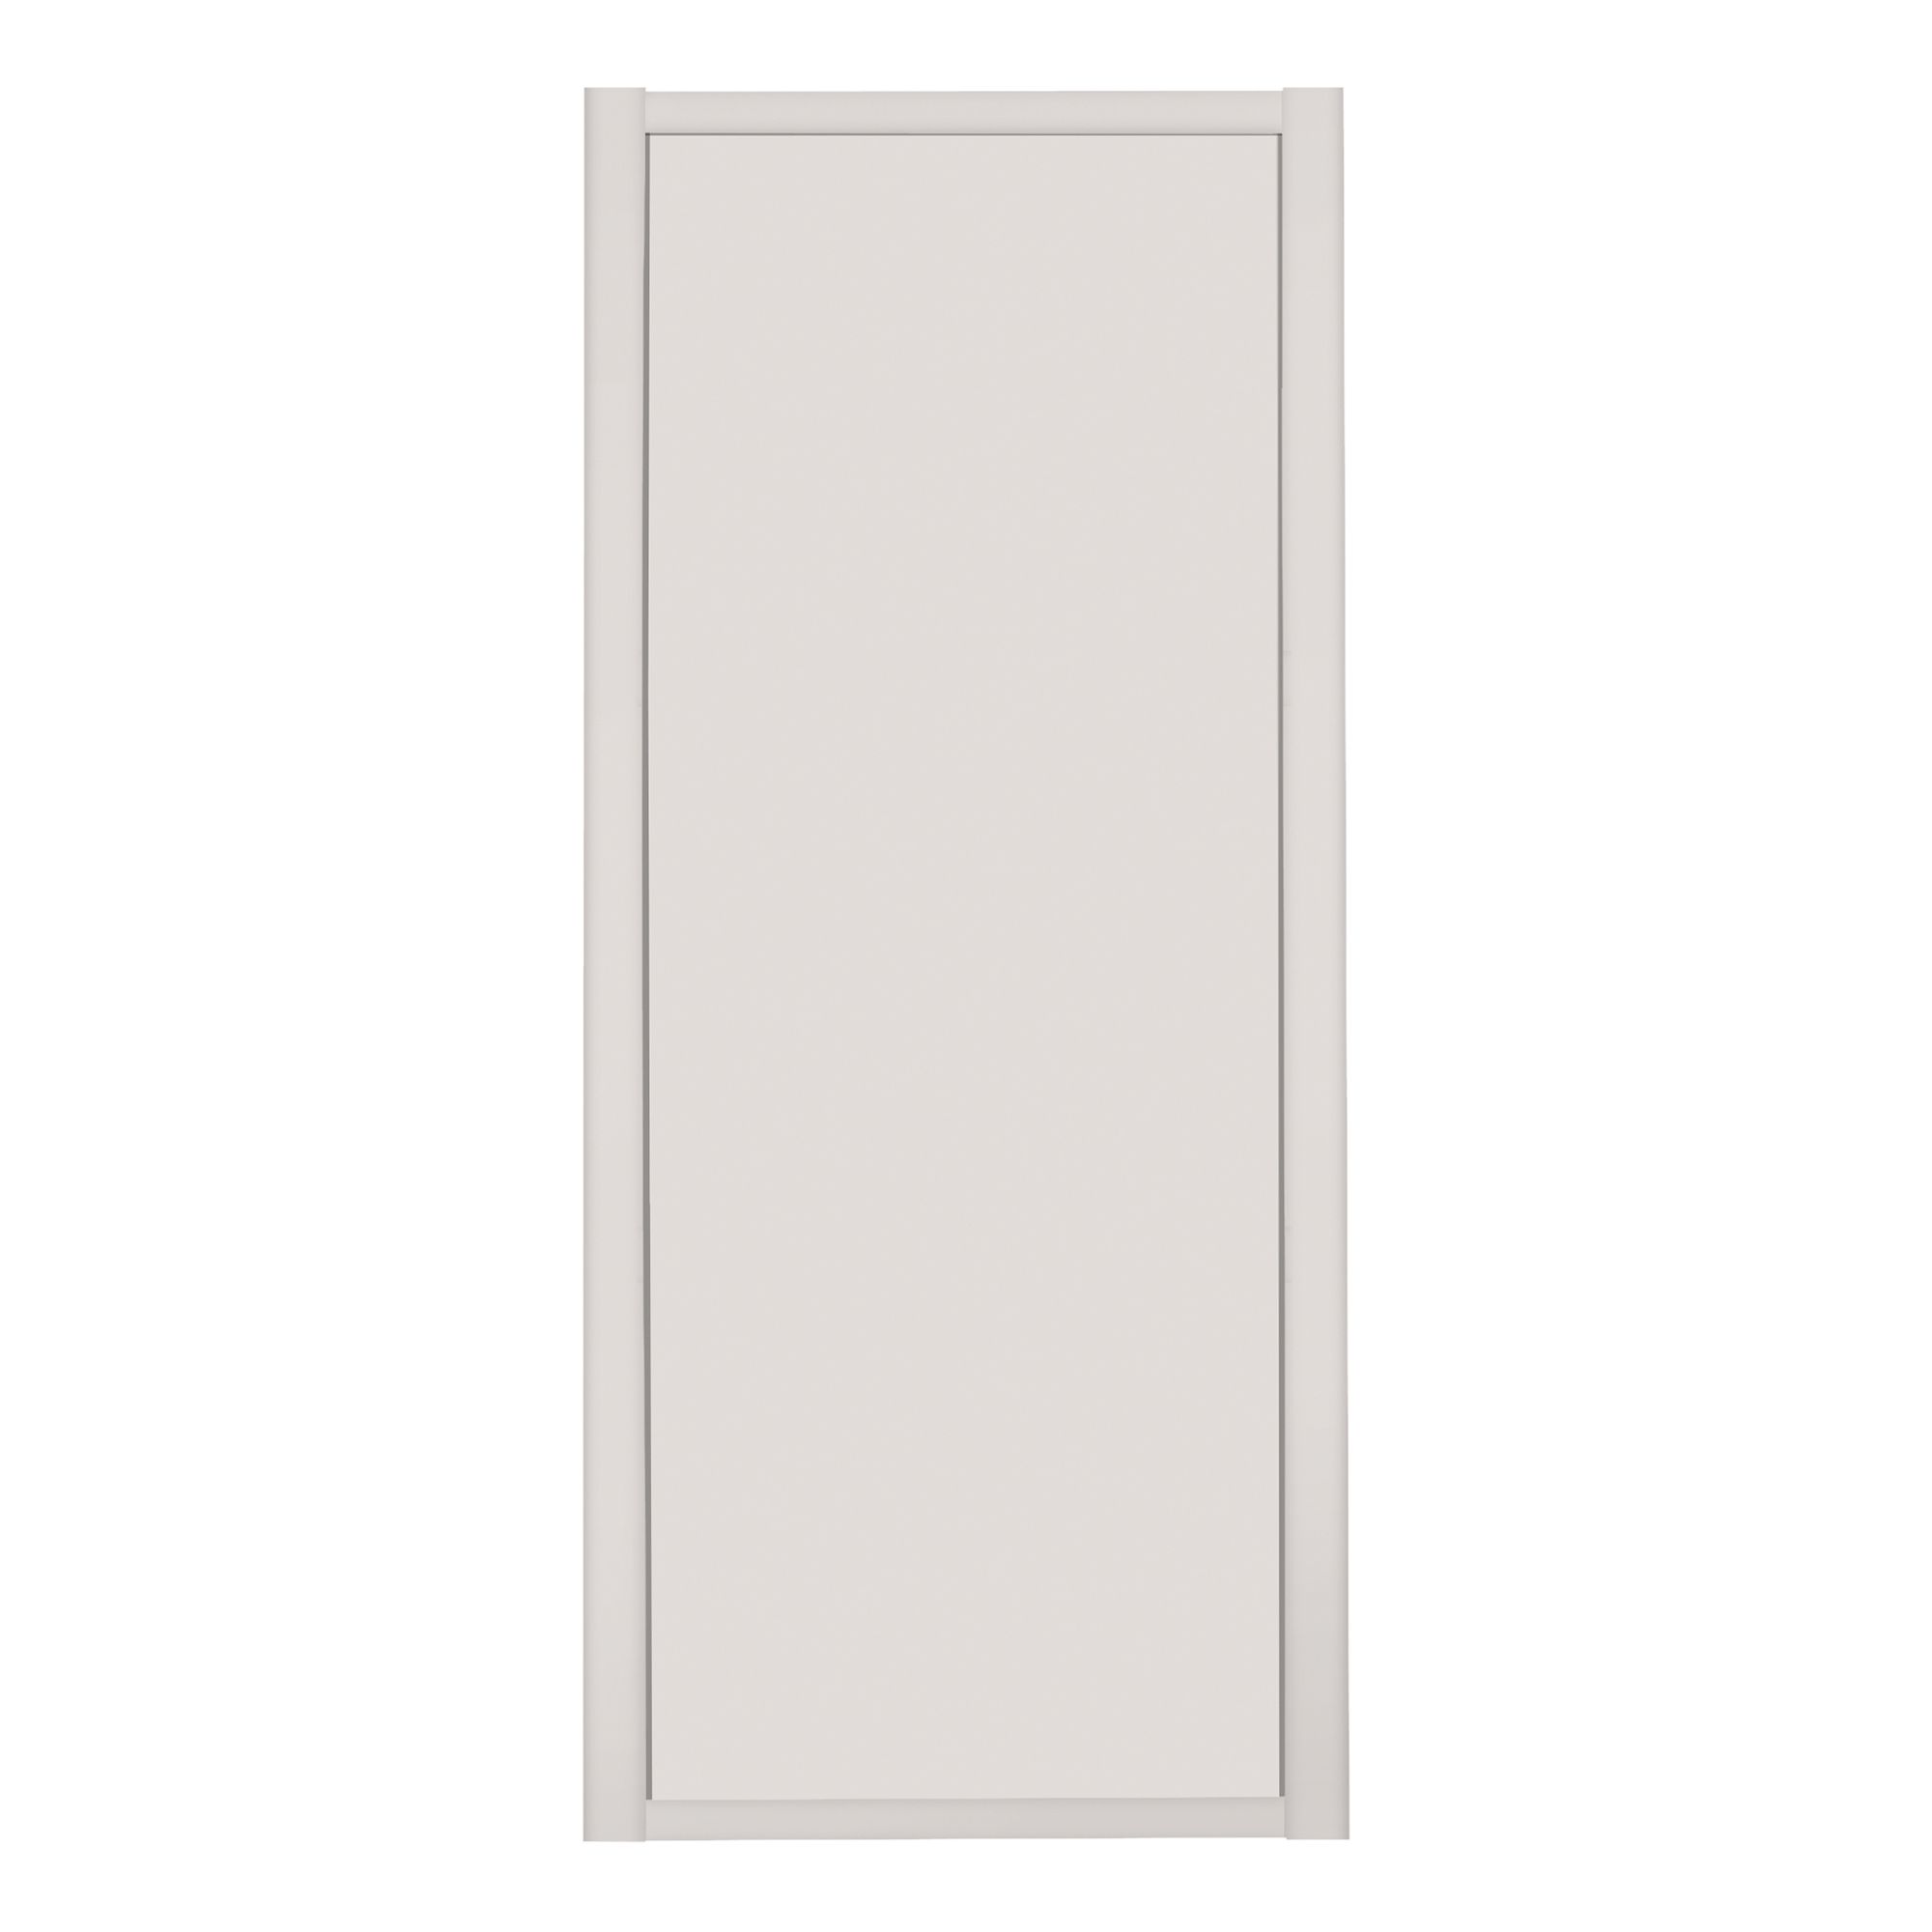 Spacepro Shaker Cashmere Single panel Sliding wardrobe door (H) 226mm x (W) 610mm